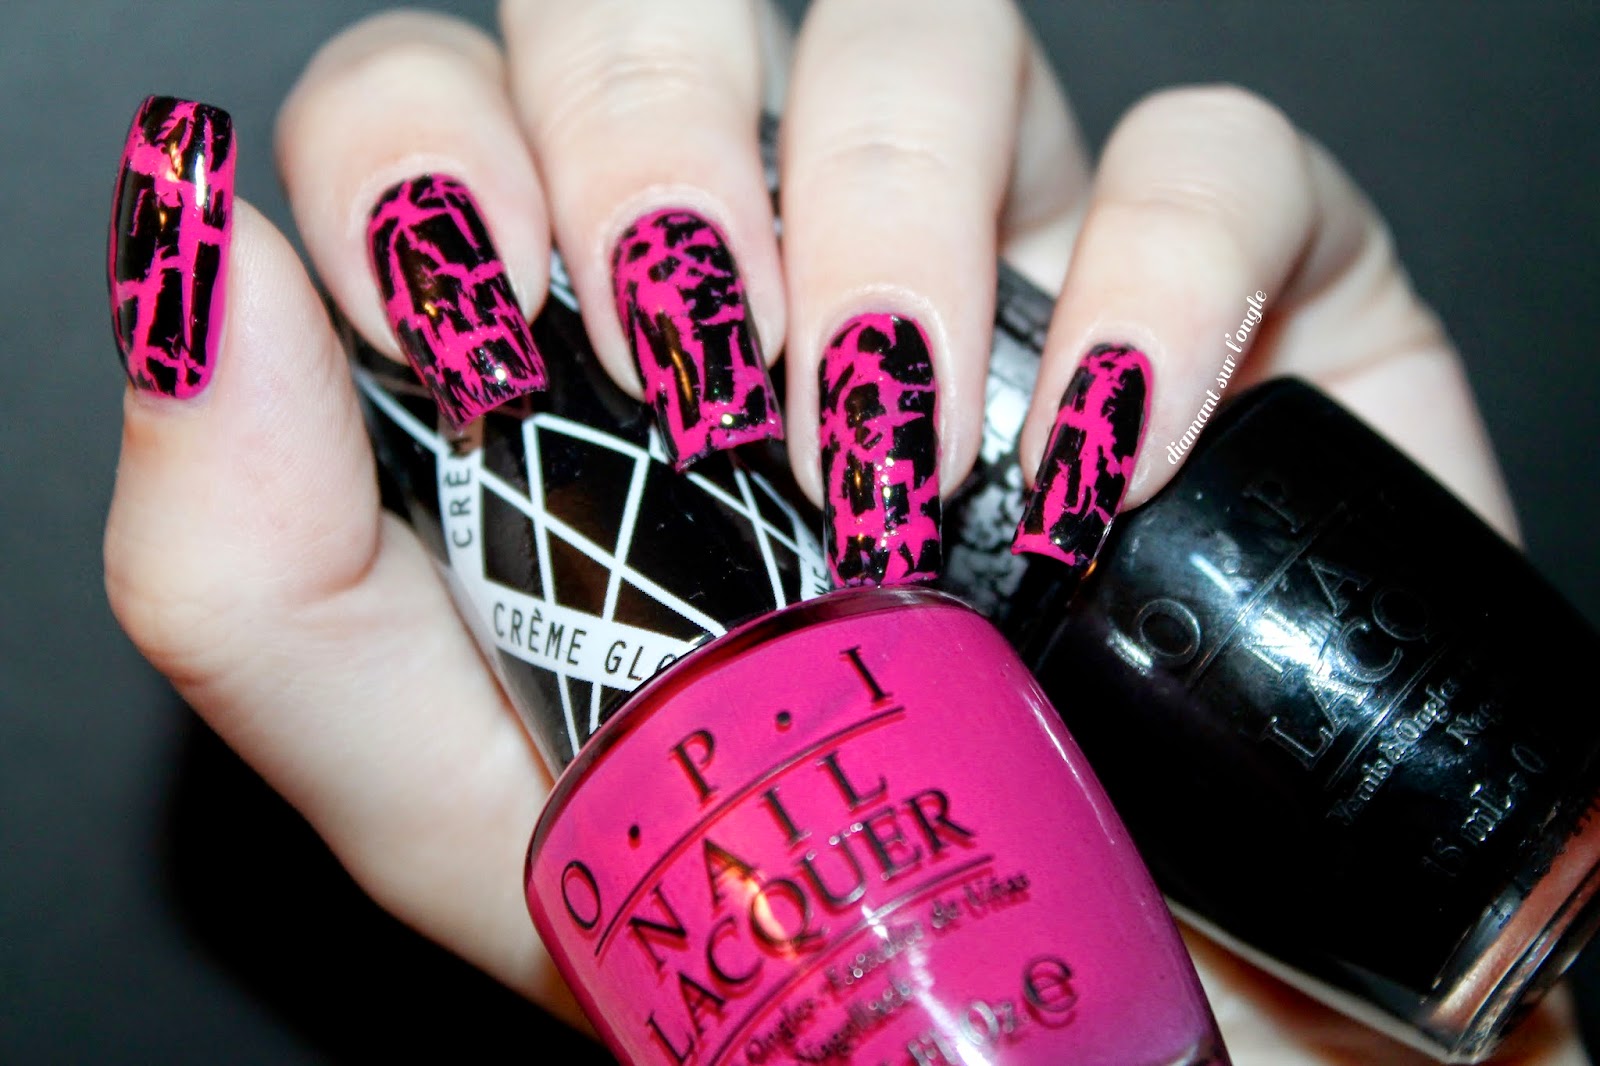 black and pink nail art done with a black shatter nail polish